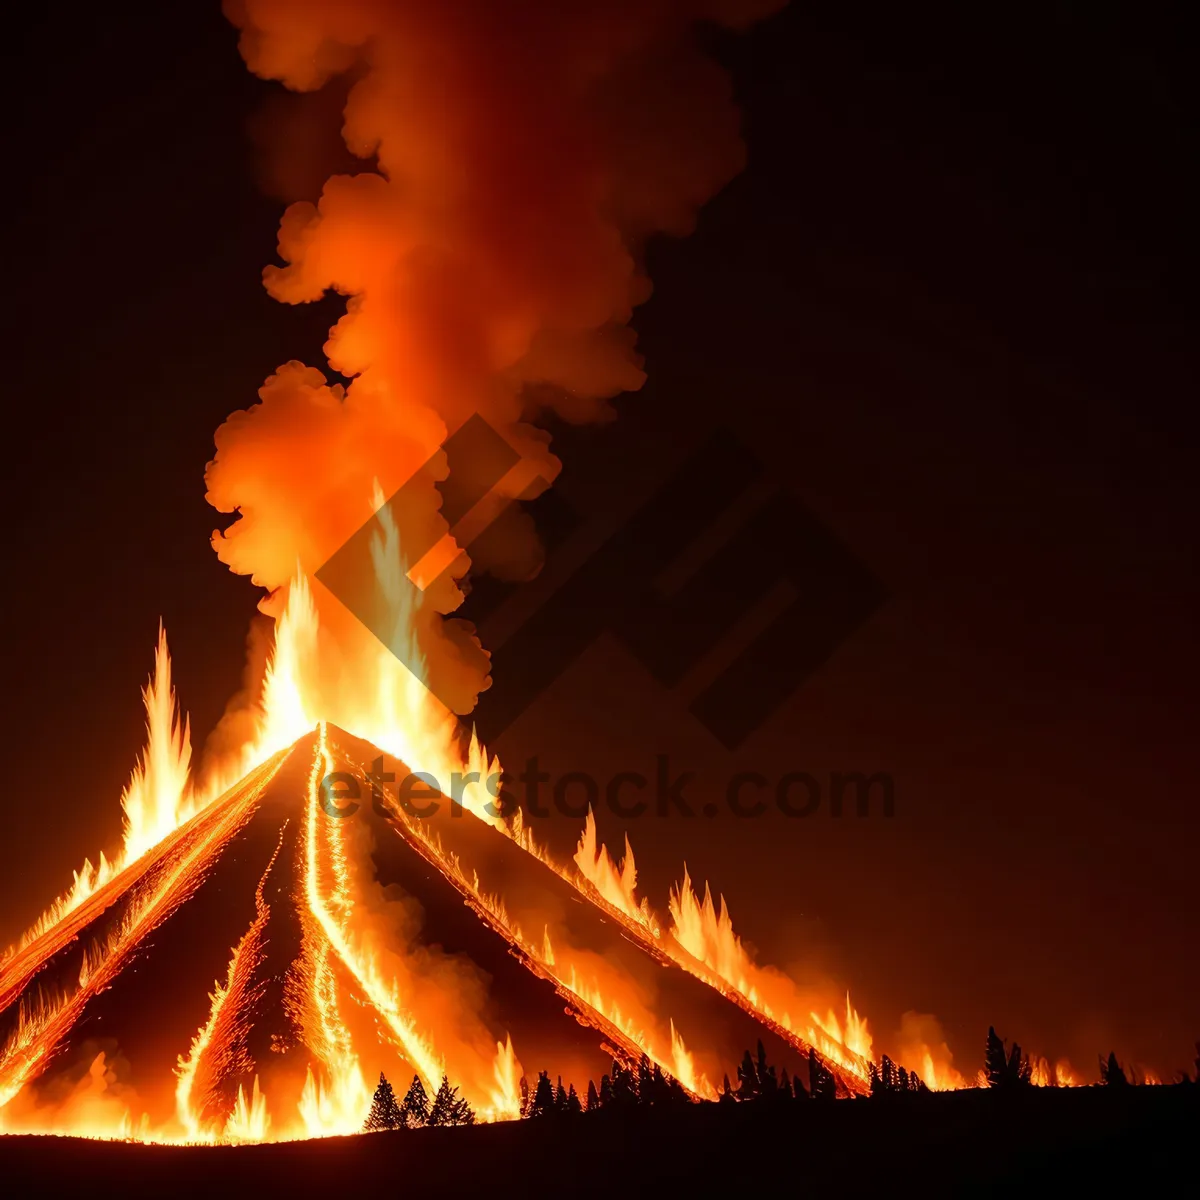 Picture of Fiery Blaze: Hot Orange Bonfire Igniting Inferno